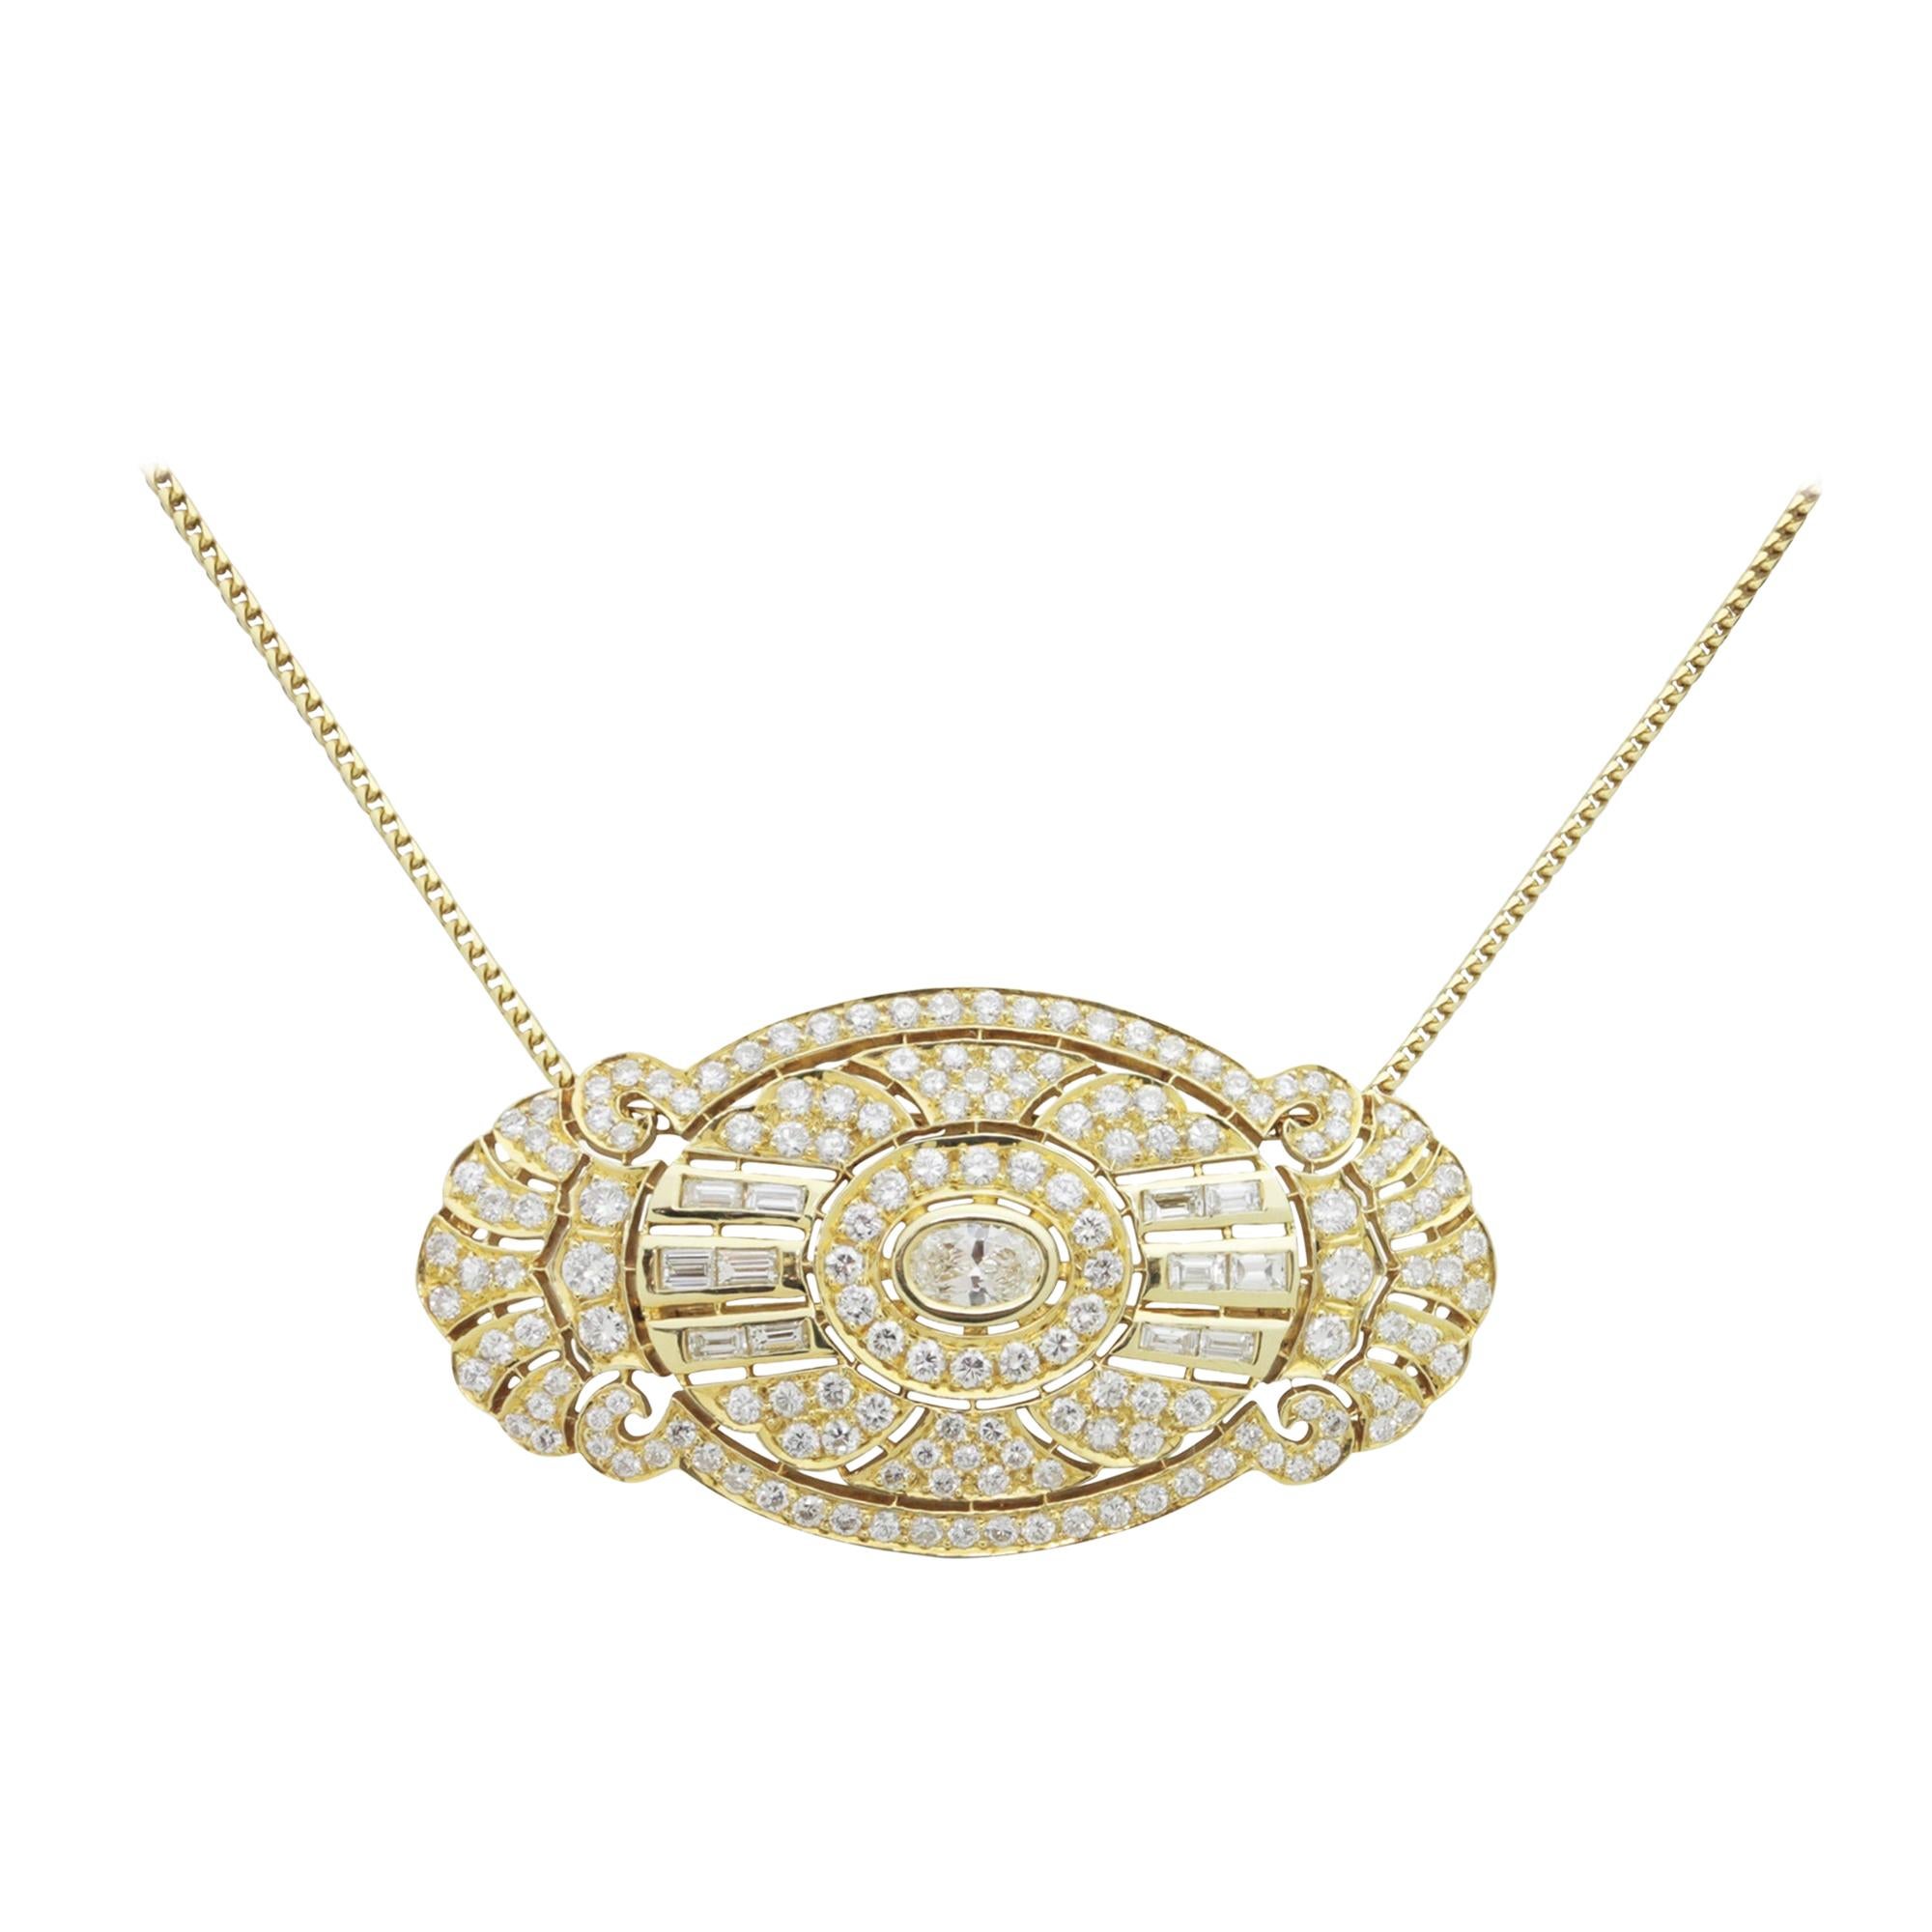 Impressive 18 Karat Gold, Art Deco Style Diamond Brooch Pendant